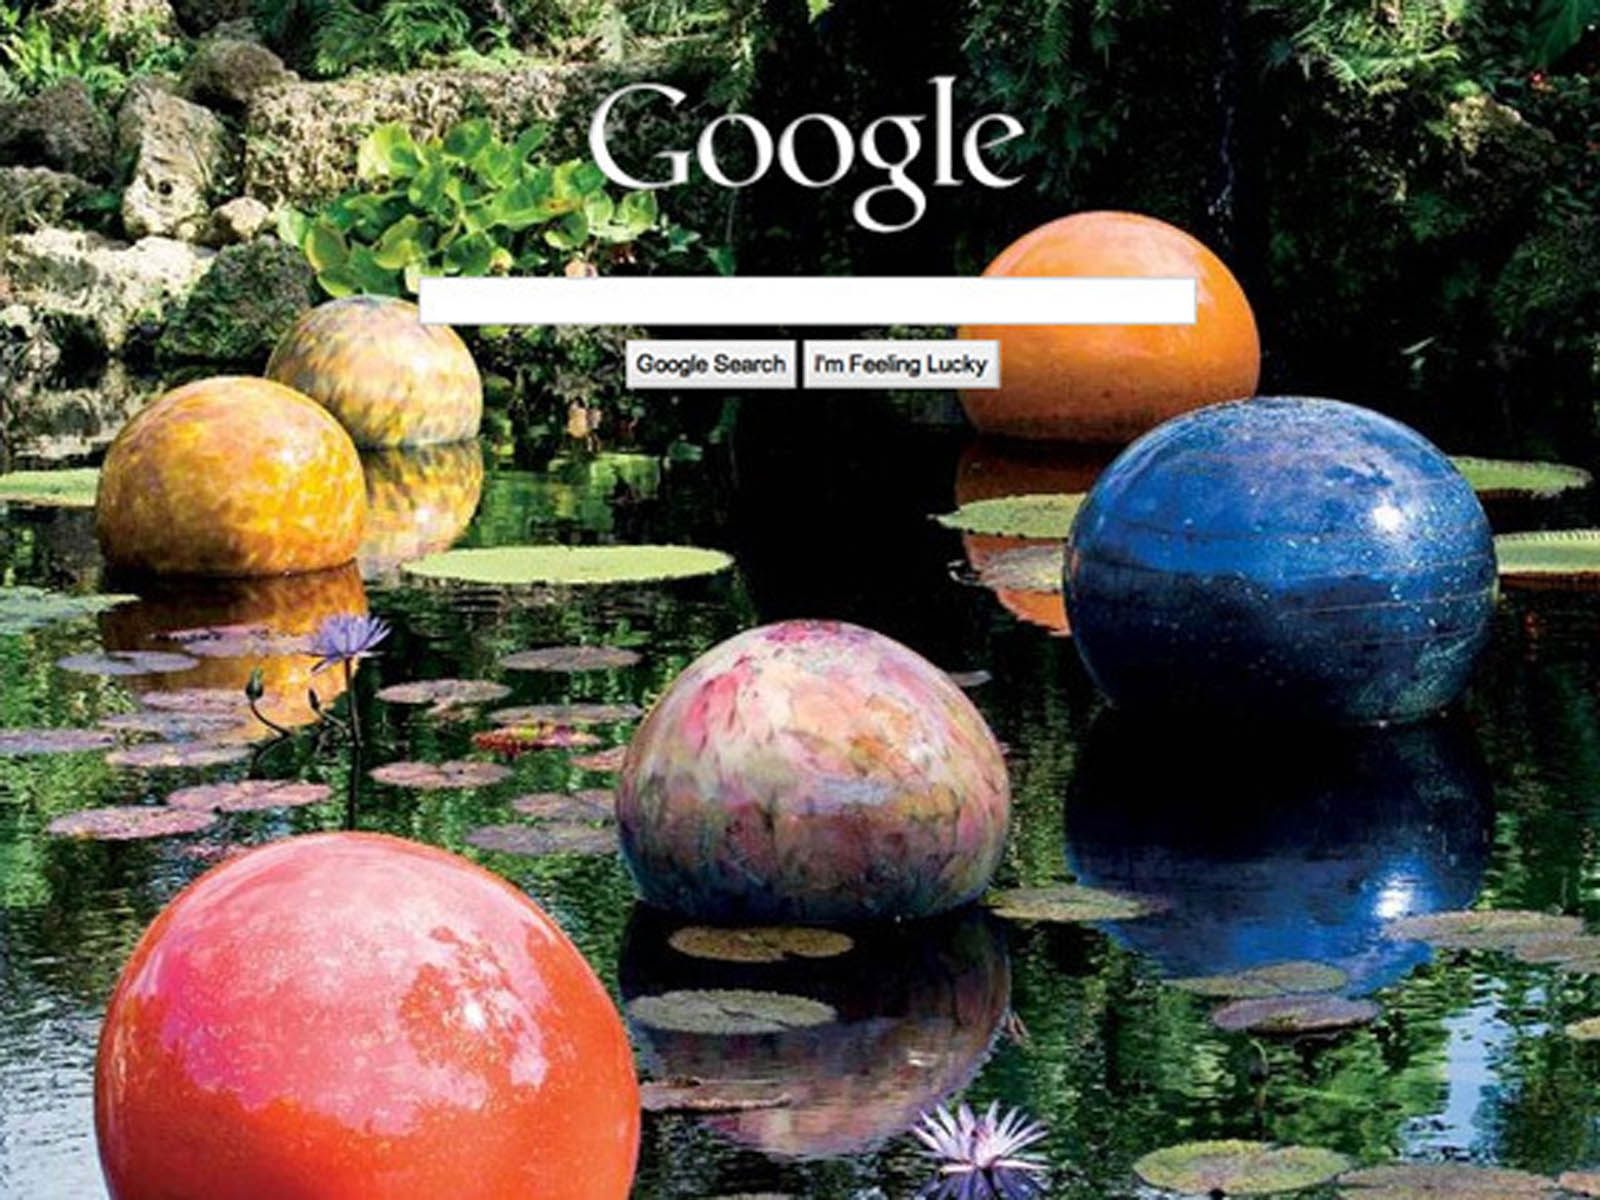 78+] Background Images Google - WallpaperSafari